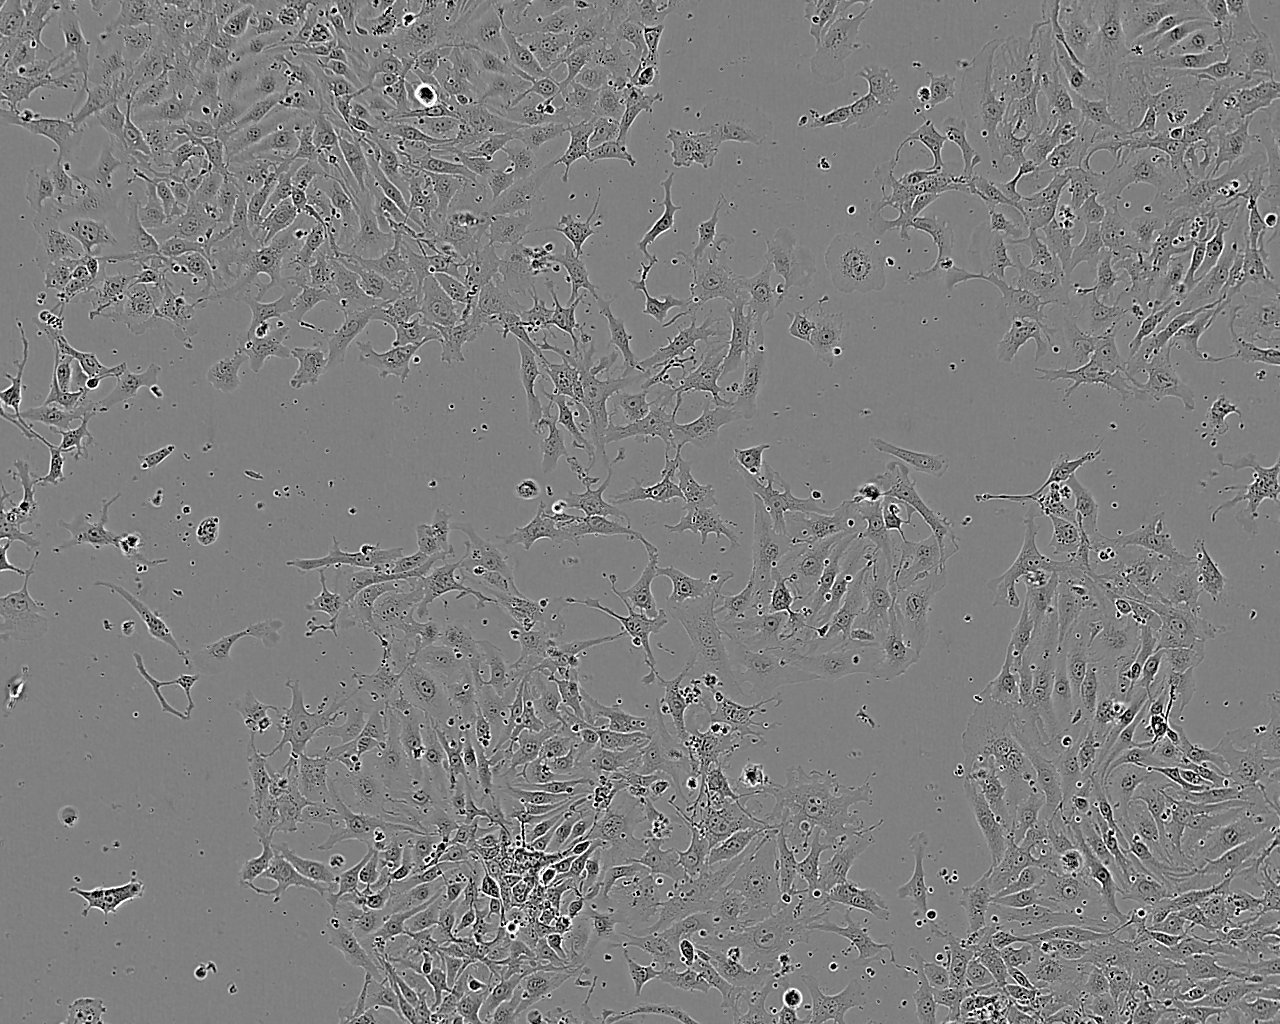 WiDr epithelioid cells人结直肠癌细胞系